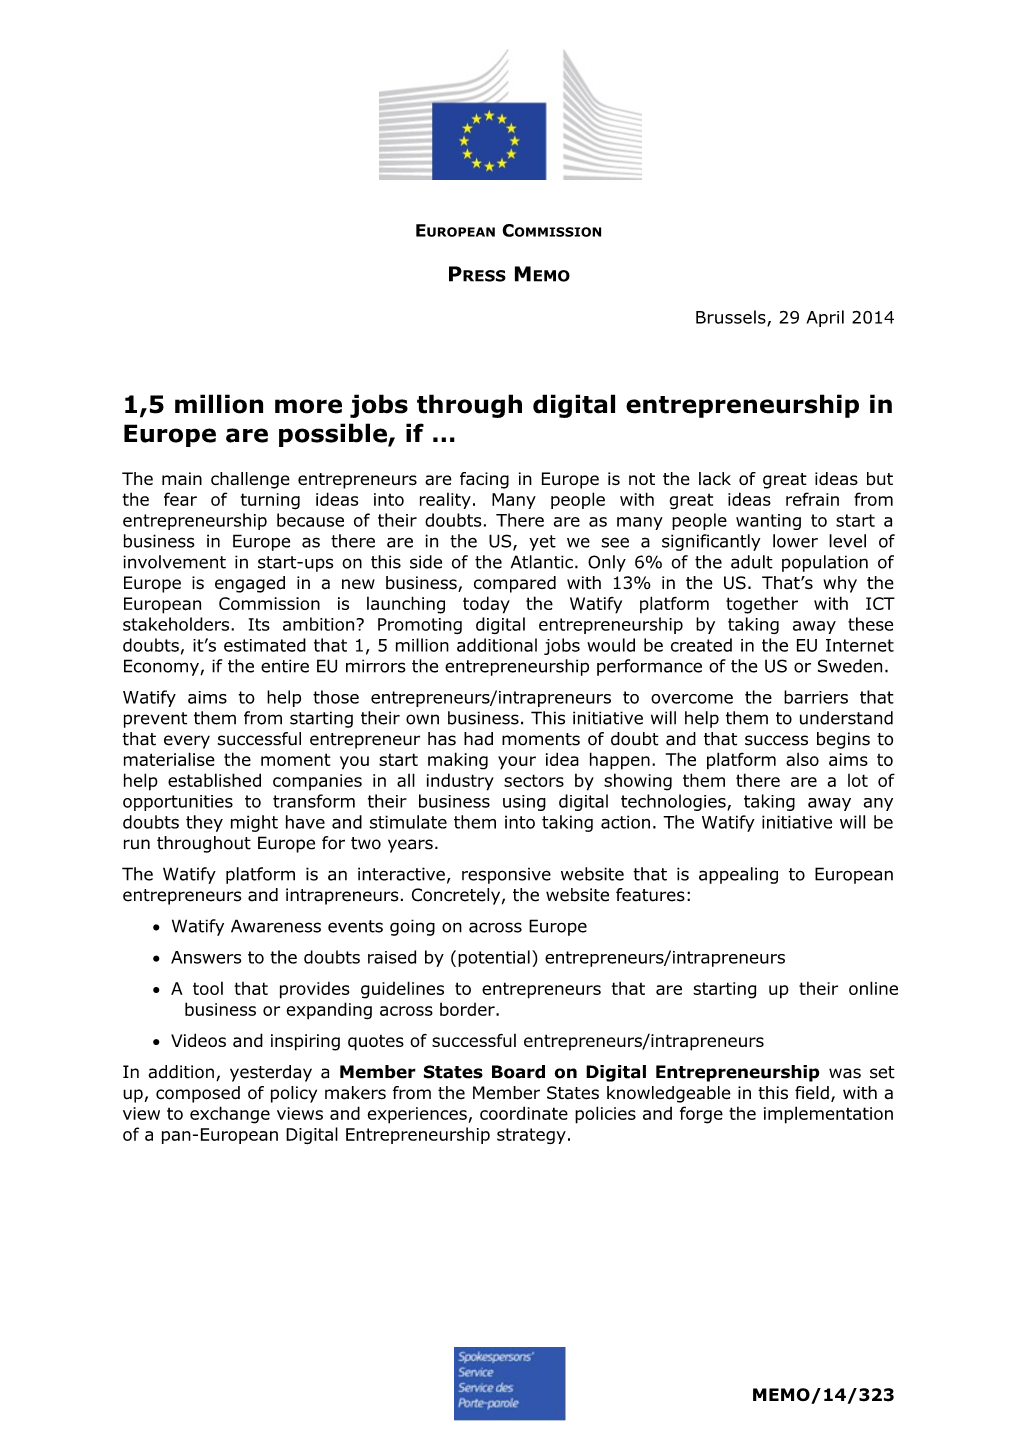 1,5 Million More Jobs Through Digital Entrepreneurship in Europeare Possible, If